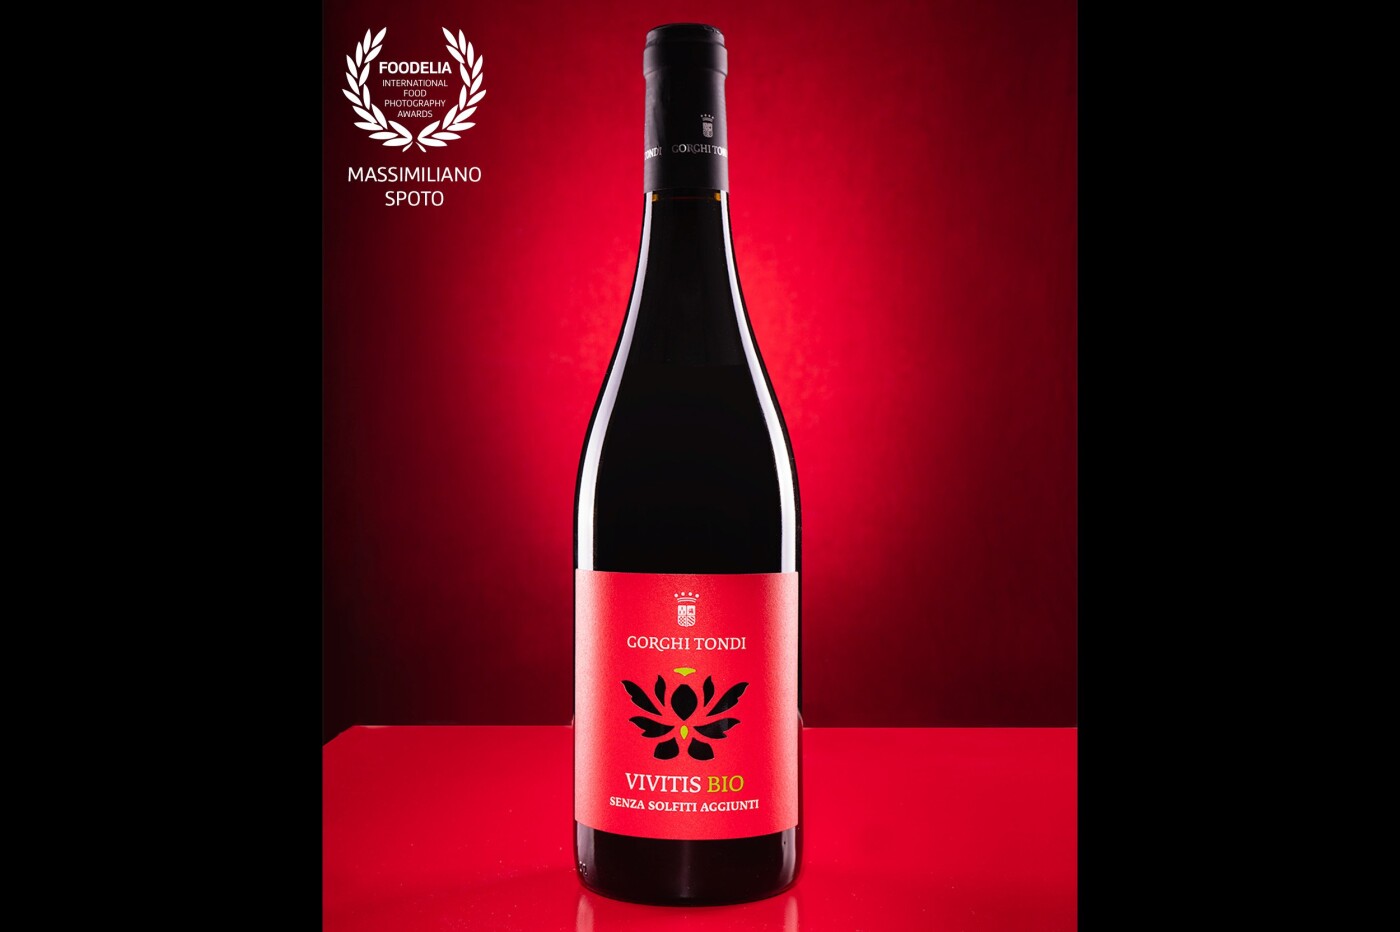 Theme: Sicilian Bio Red Wine<br />
Camera: Sony Alpha A7RII<br />
Lens: Sony 50 mm f 2,8 macro<br />
Flash: Elinchrom with two strip softbox<br />
Settings: ISO 64, 1/125 sec at f/13 with a tripod<br />
Shot in my studio<br />
Food Stylist: Stefania Di Fato (@stefaniadifato on Instagram)